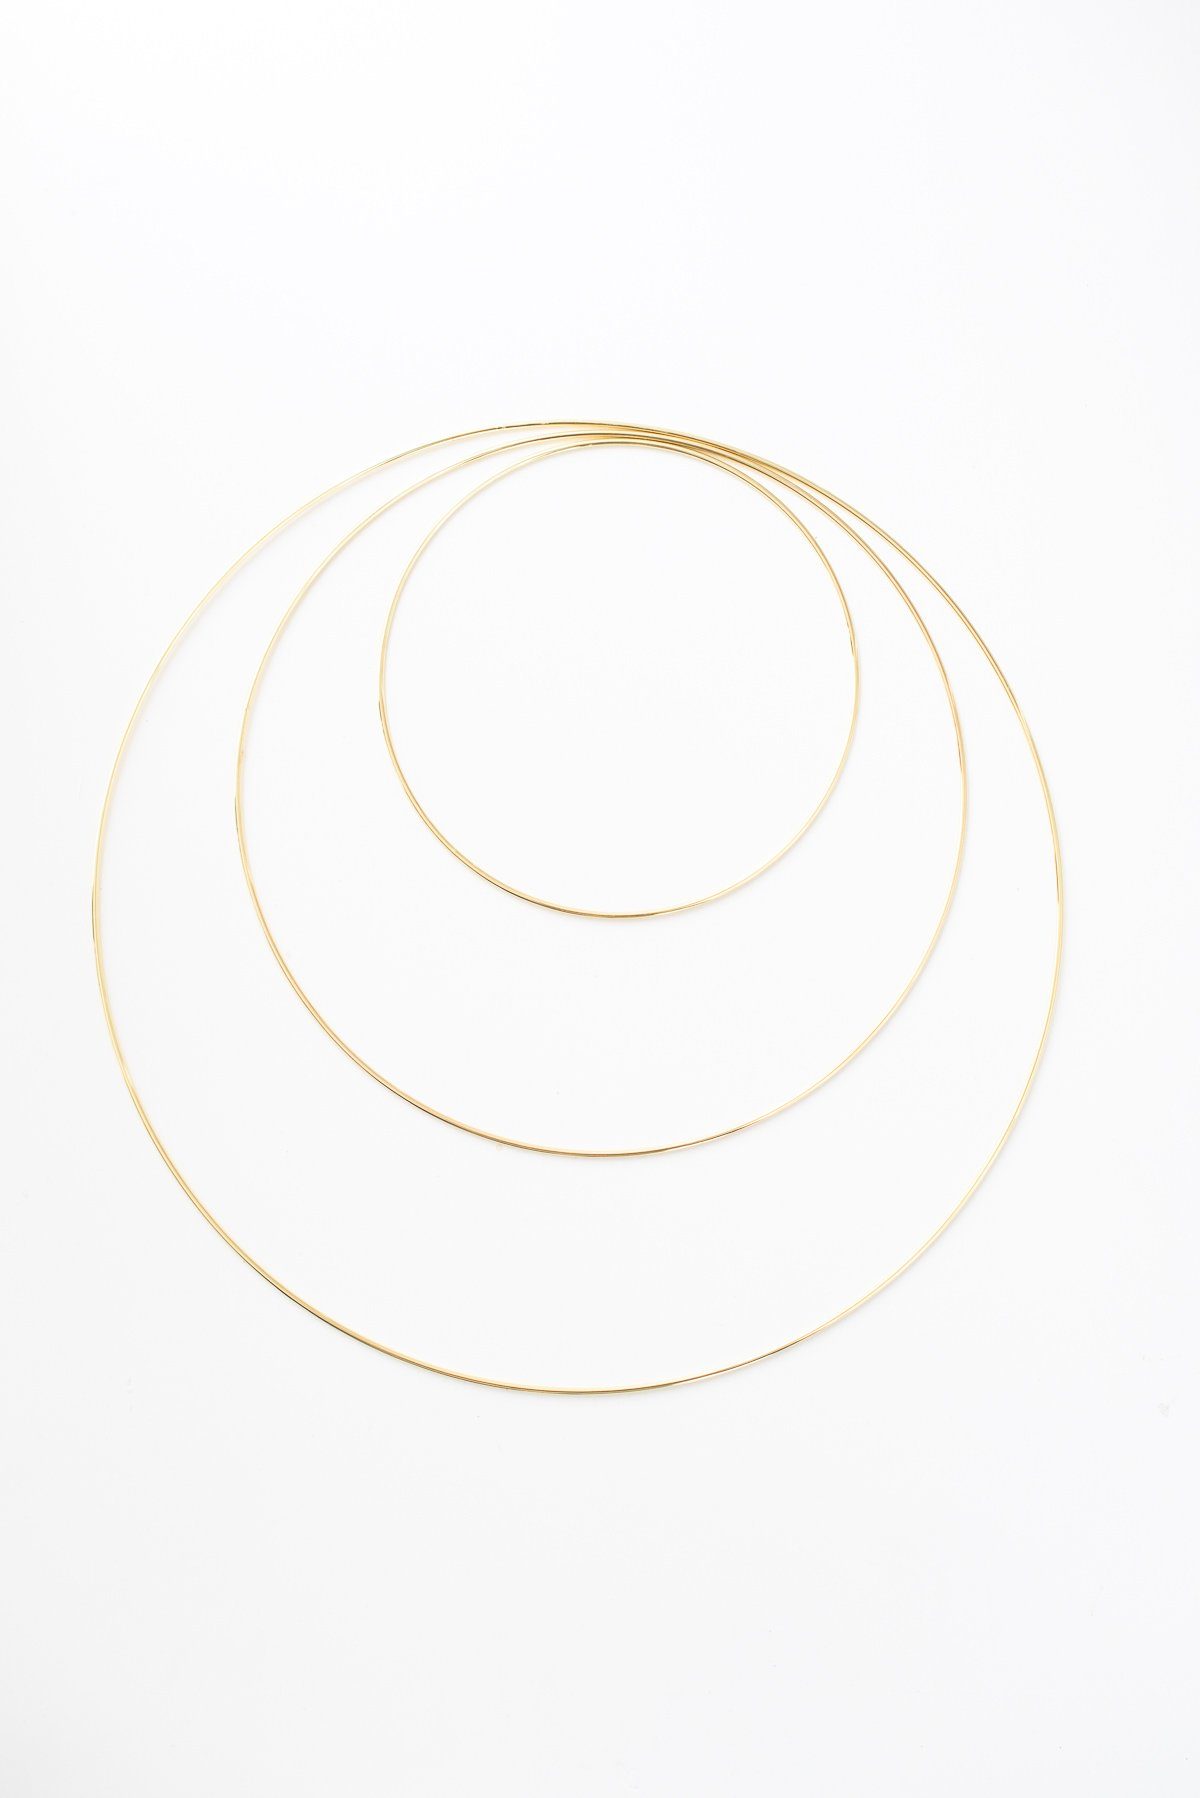 Basteln & Dekorieren Skandi gold 25x0,3 cm Parts4Living Metall Ring zum Hängen